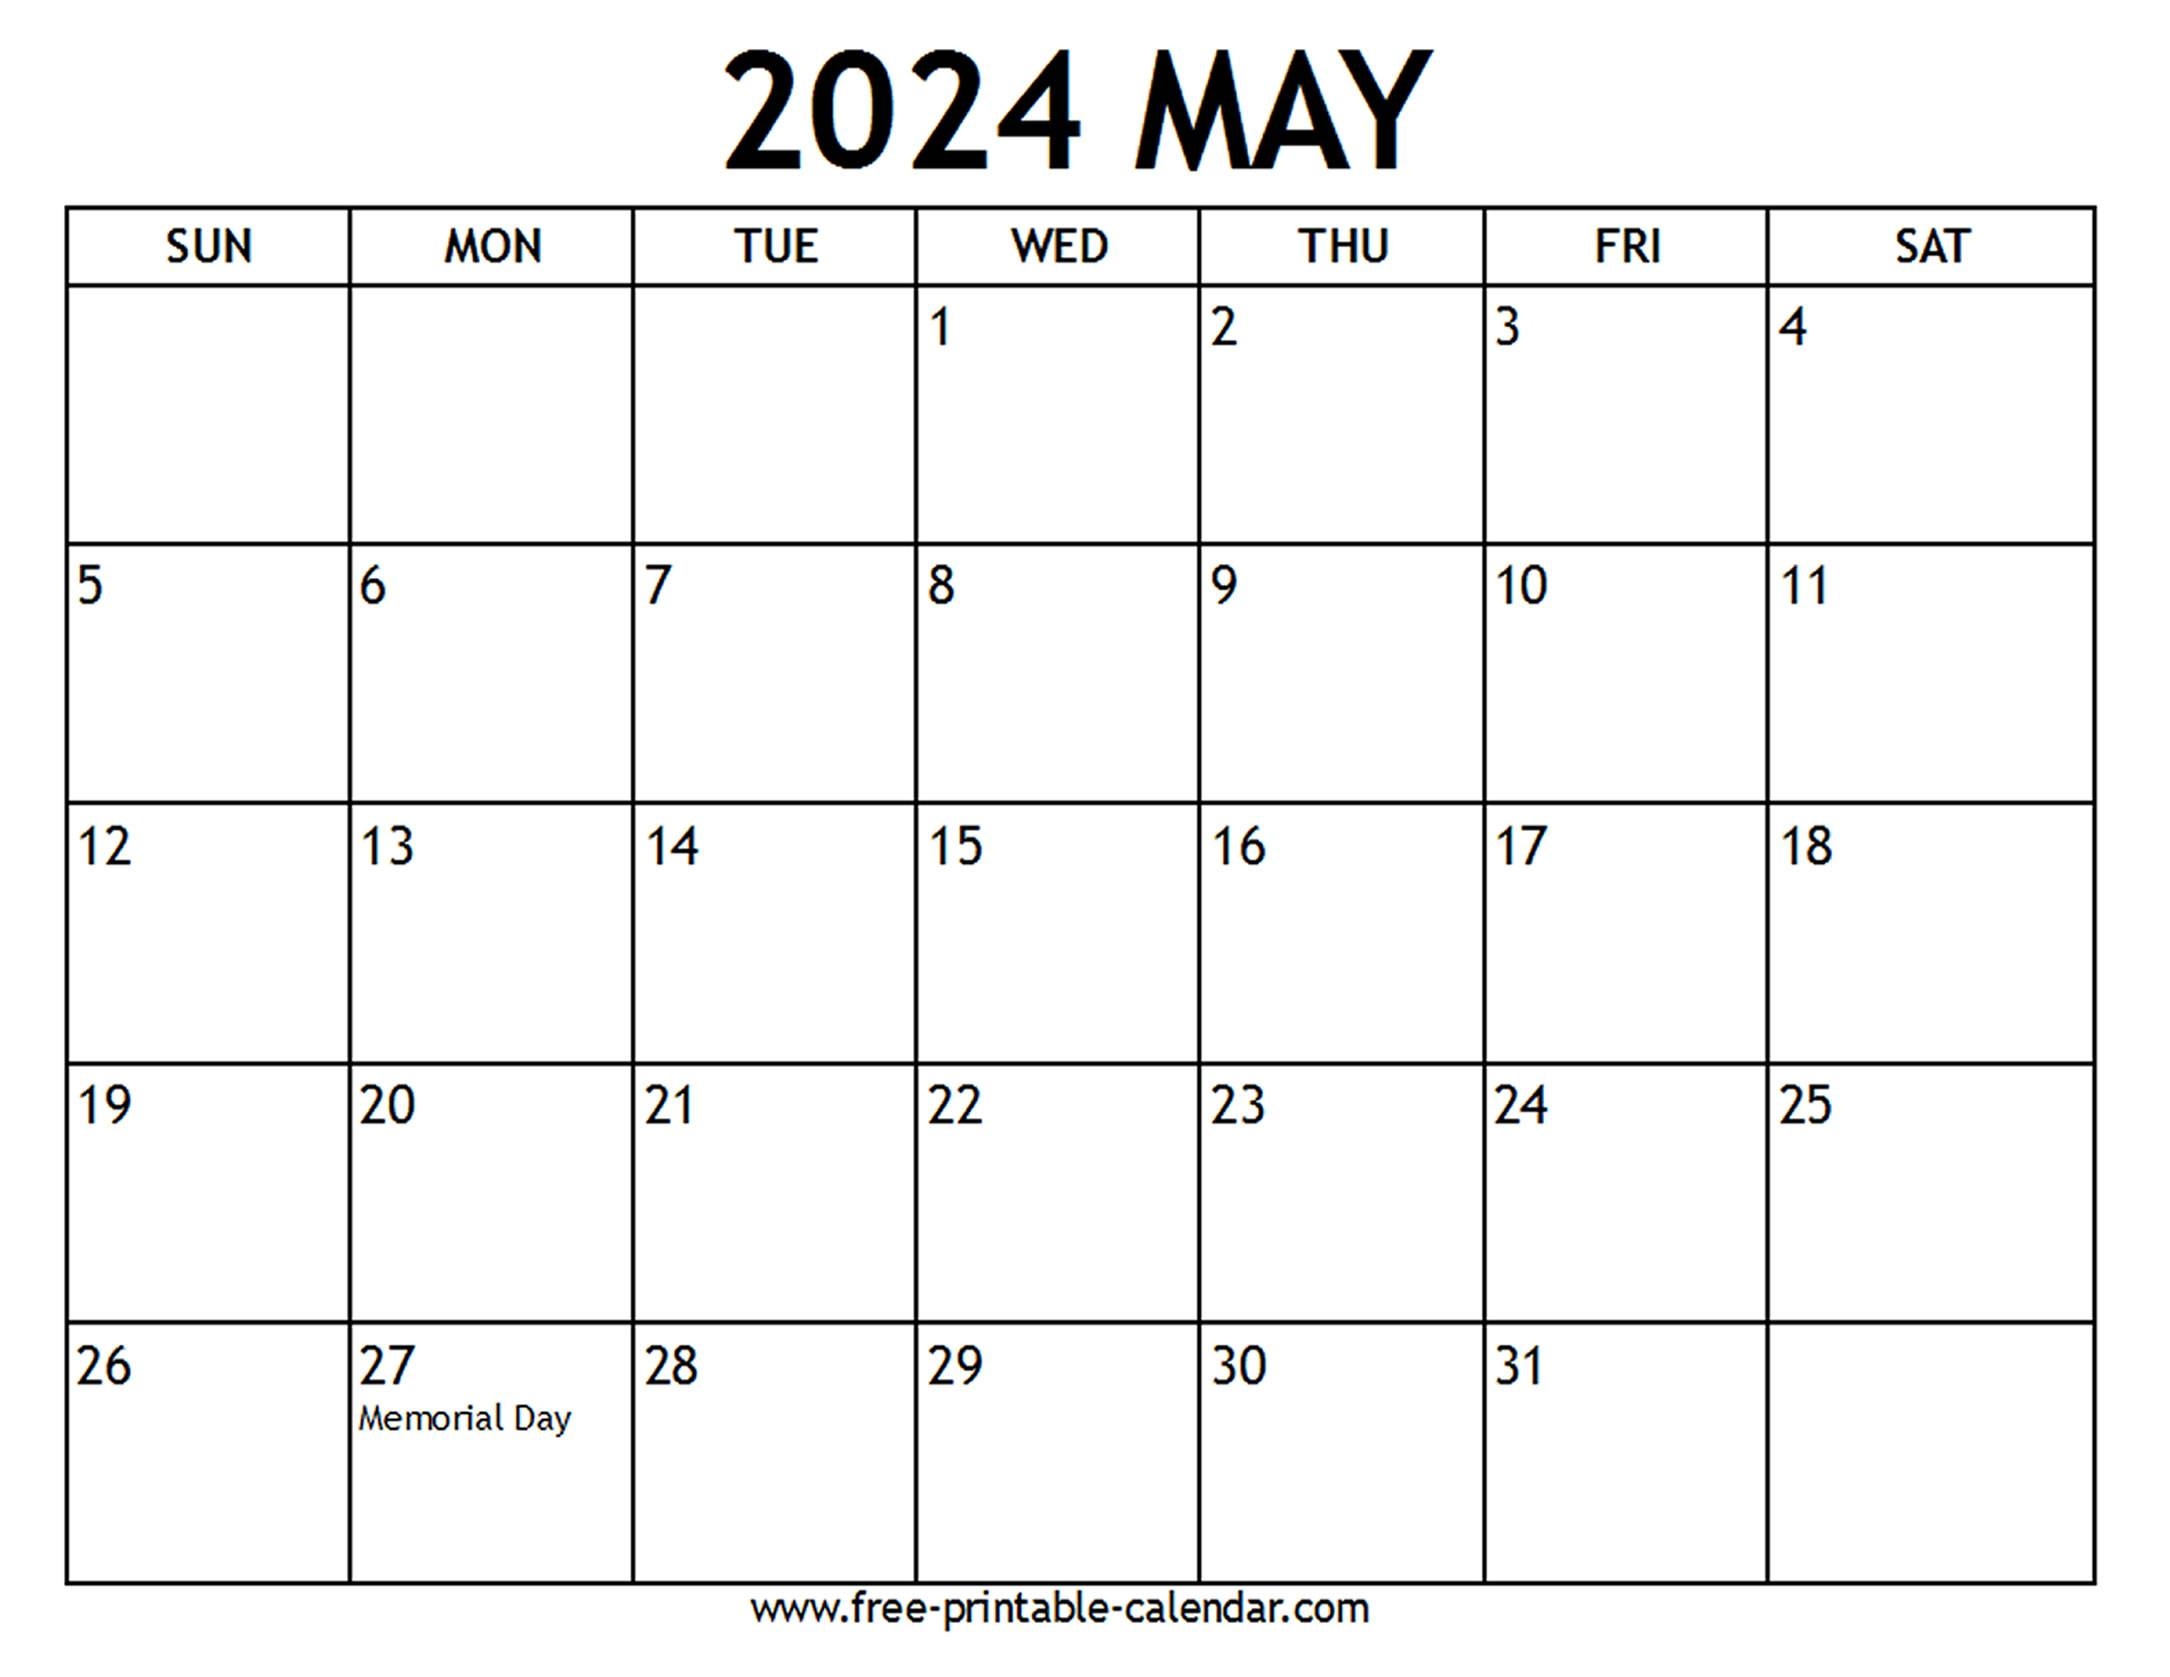 May 2024 Calendar Us Holidays - Free-Printable-Calendar inside Free Printable Calendar 2024 May With Holidays